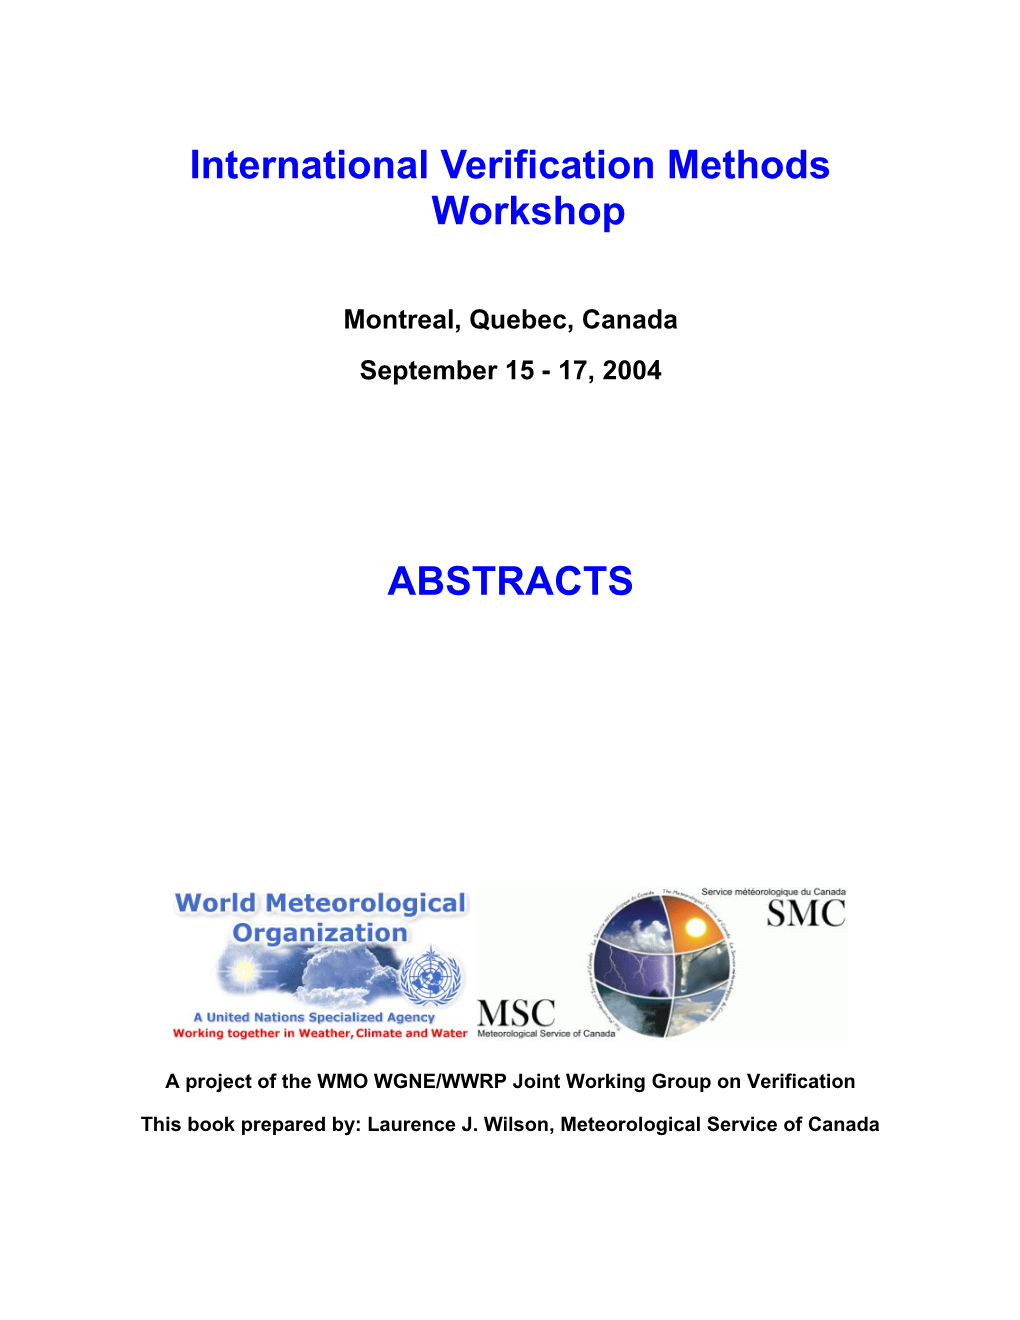 International Verification Methods Workshop Abstracts